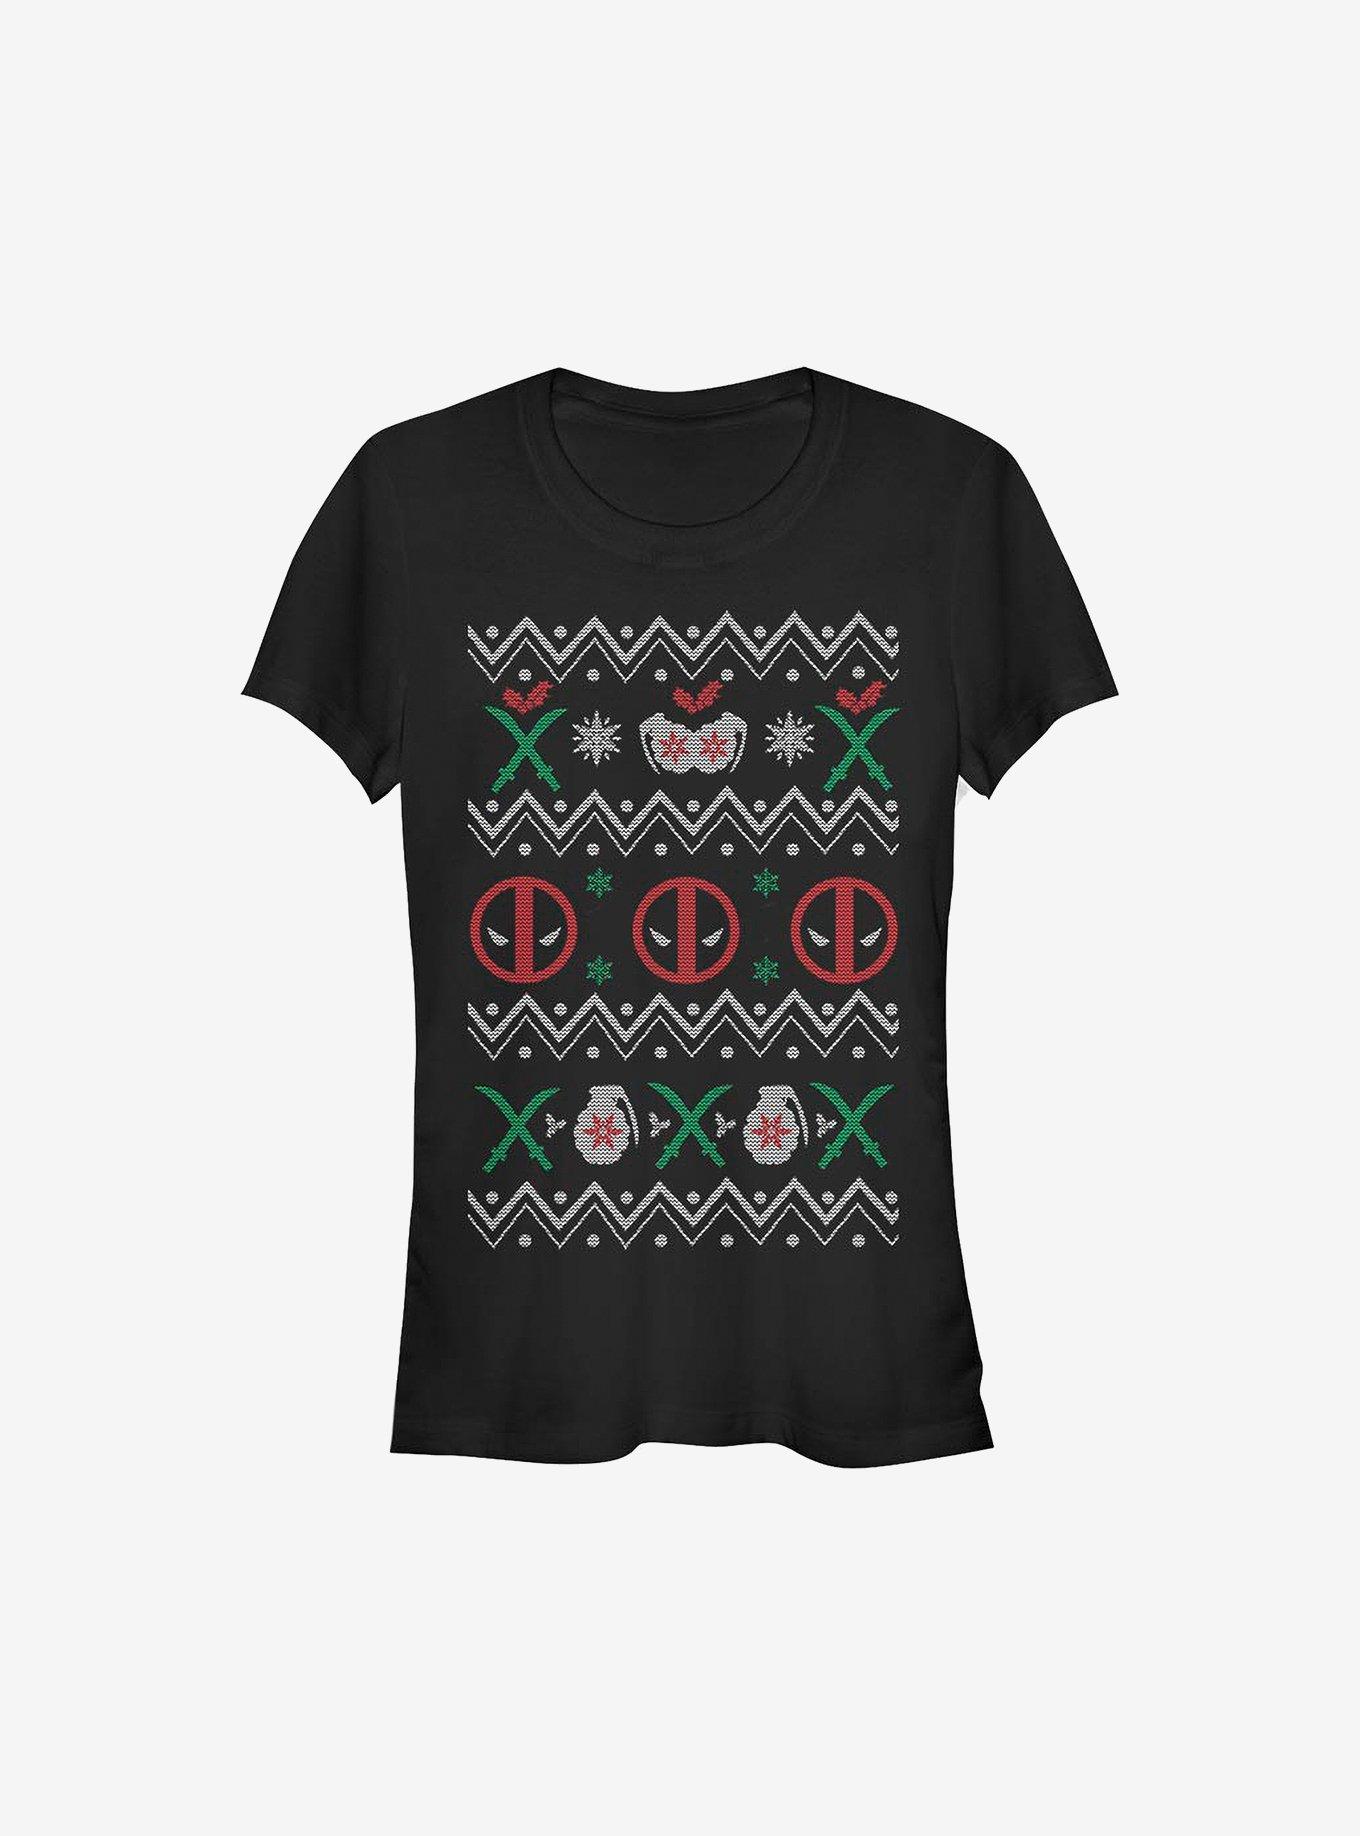 Marvel Deadpool Ugly Christmas Sweater Girls T-Shirt, BLACK, hi-res